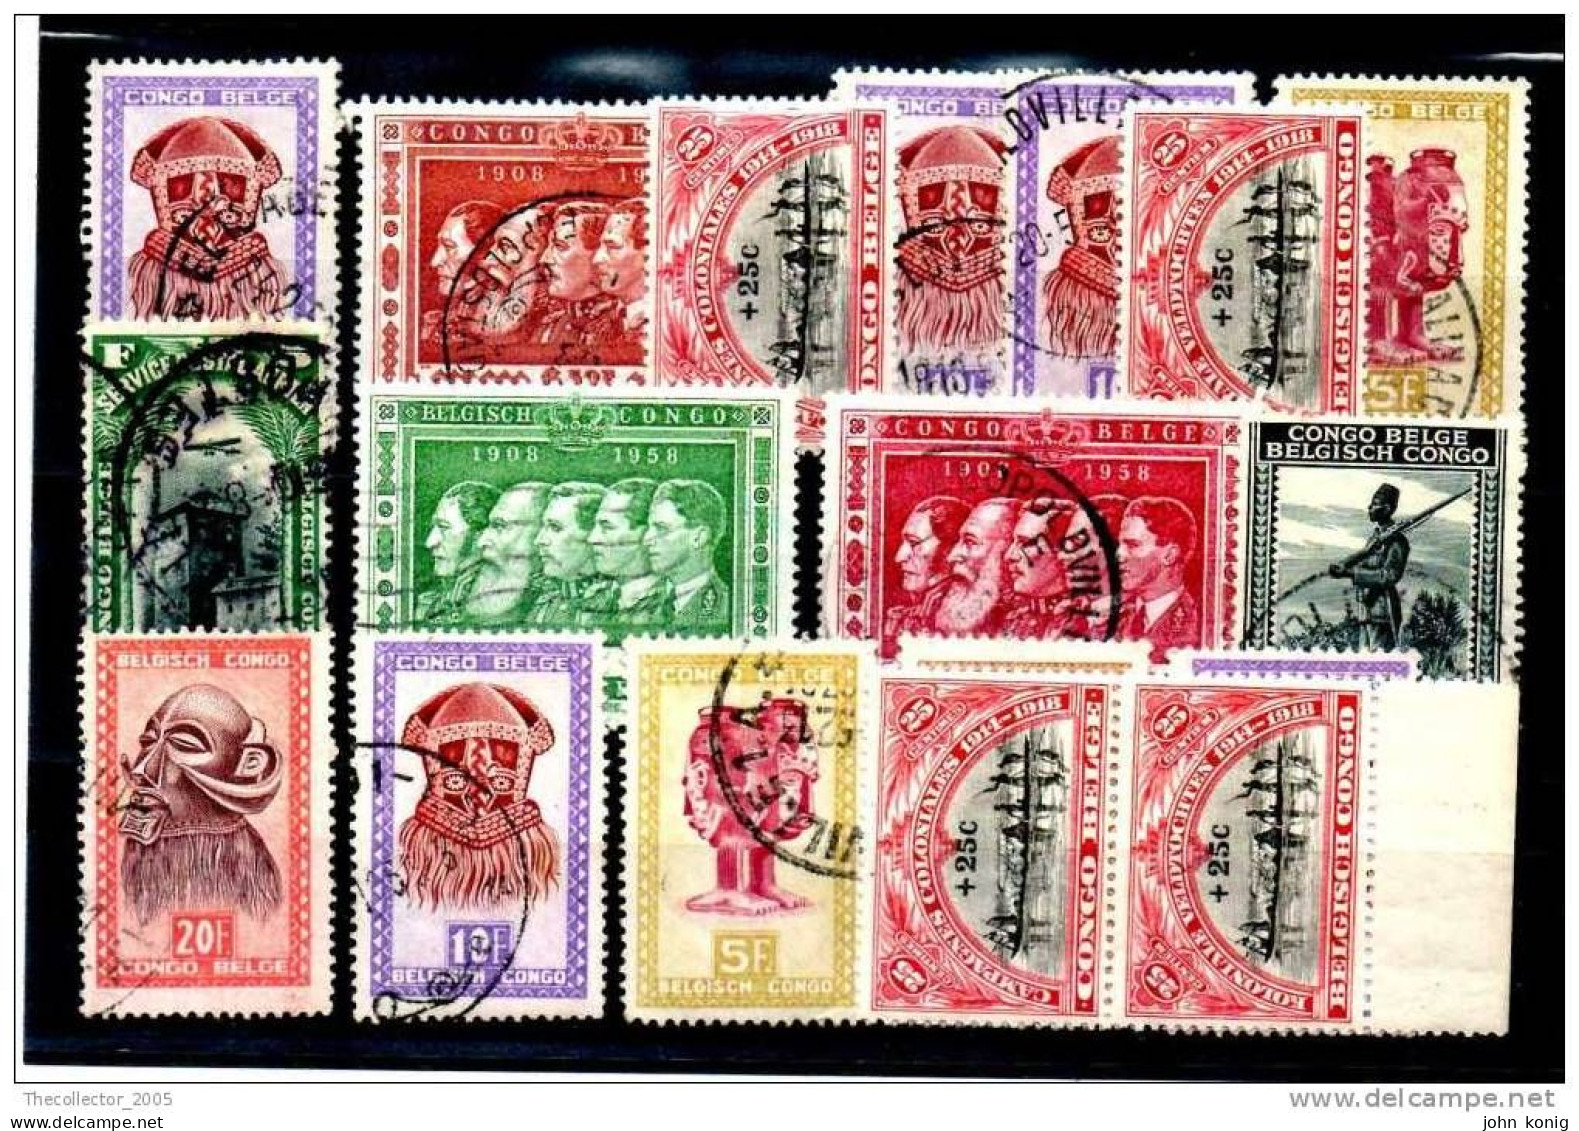 BELGIO (CONGO BELGA) - BELGIE (BELGISCH CONGO) - BELGIQUE (CONGO BELGE) - Lotto Misto Francobollii - Mixed Stamps Lot - Collezioni